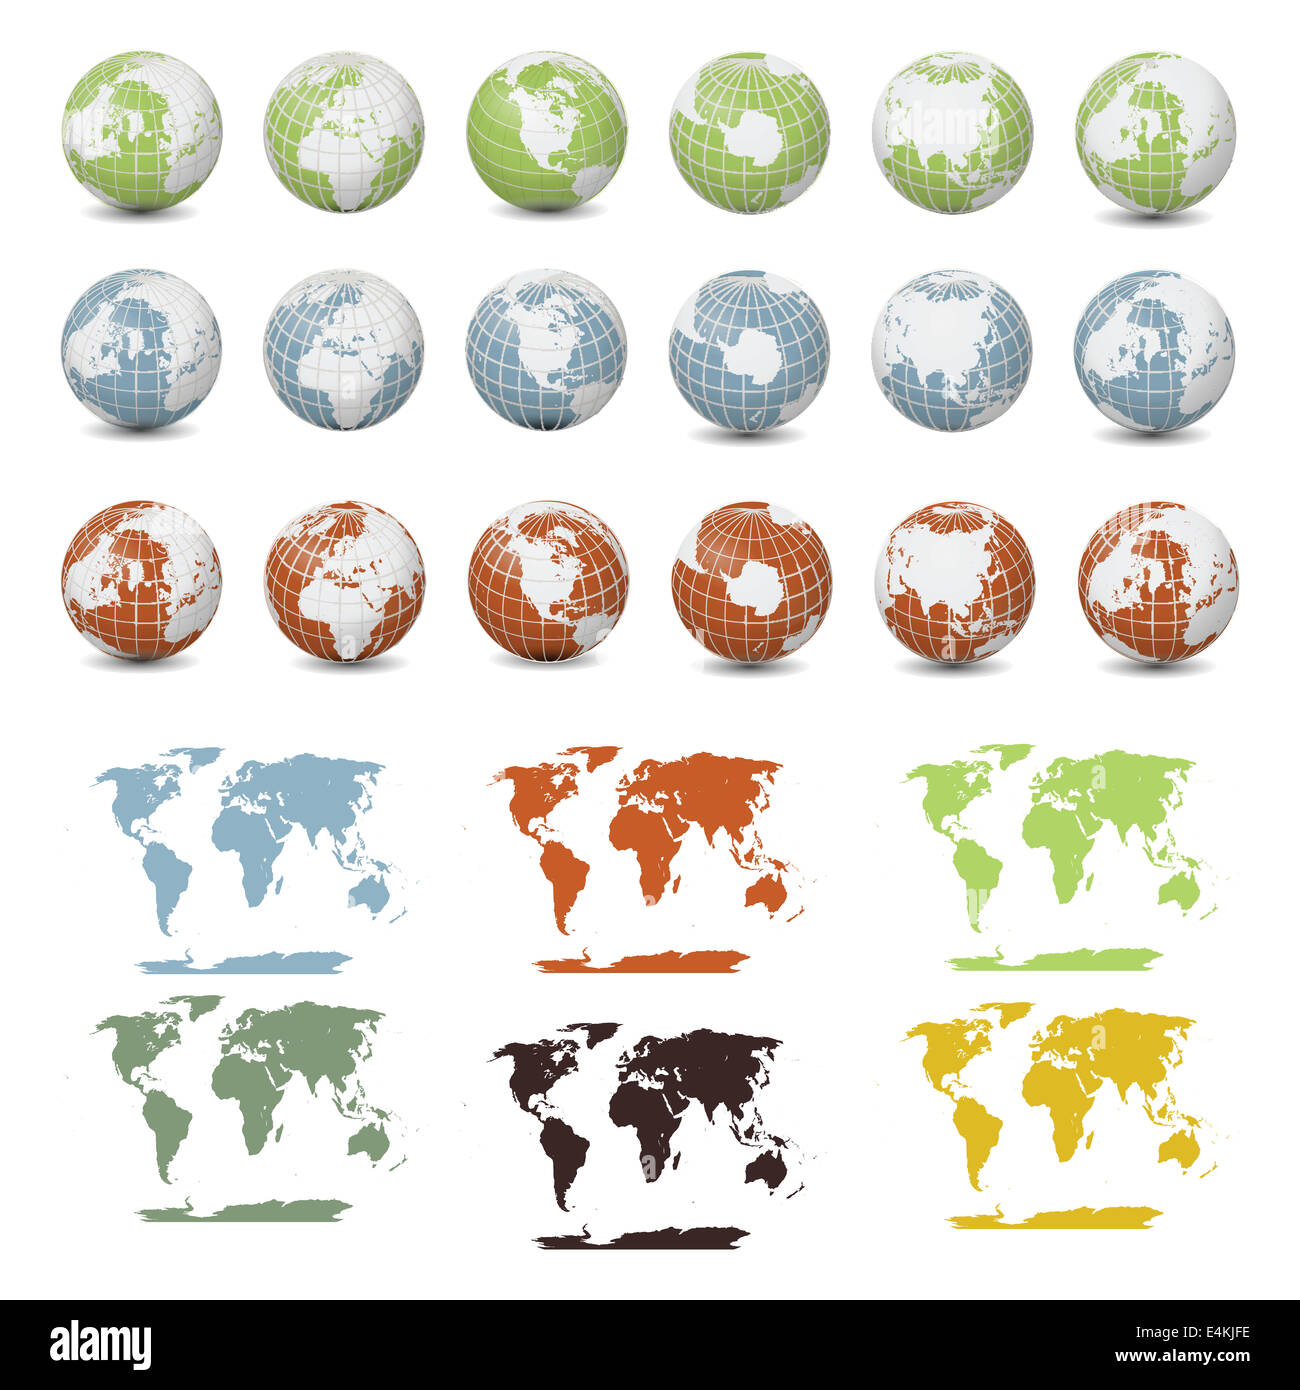 Raccolta di mappe terrestri e globi Foto Stock